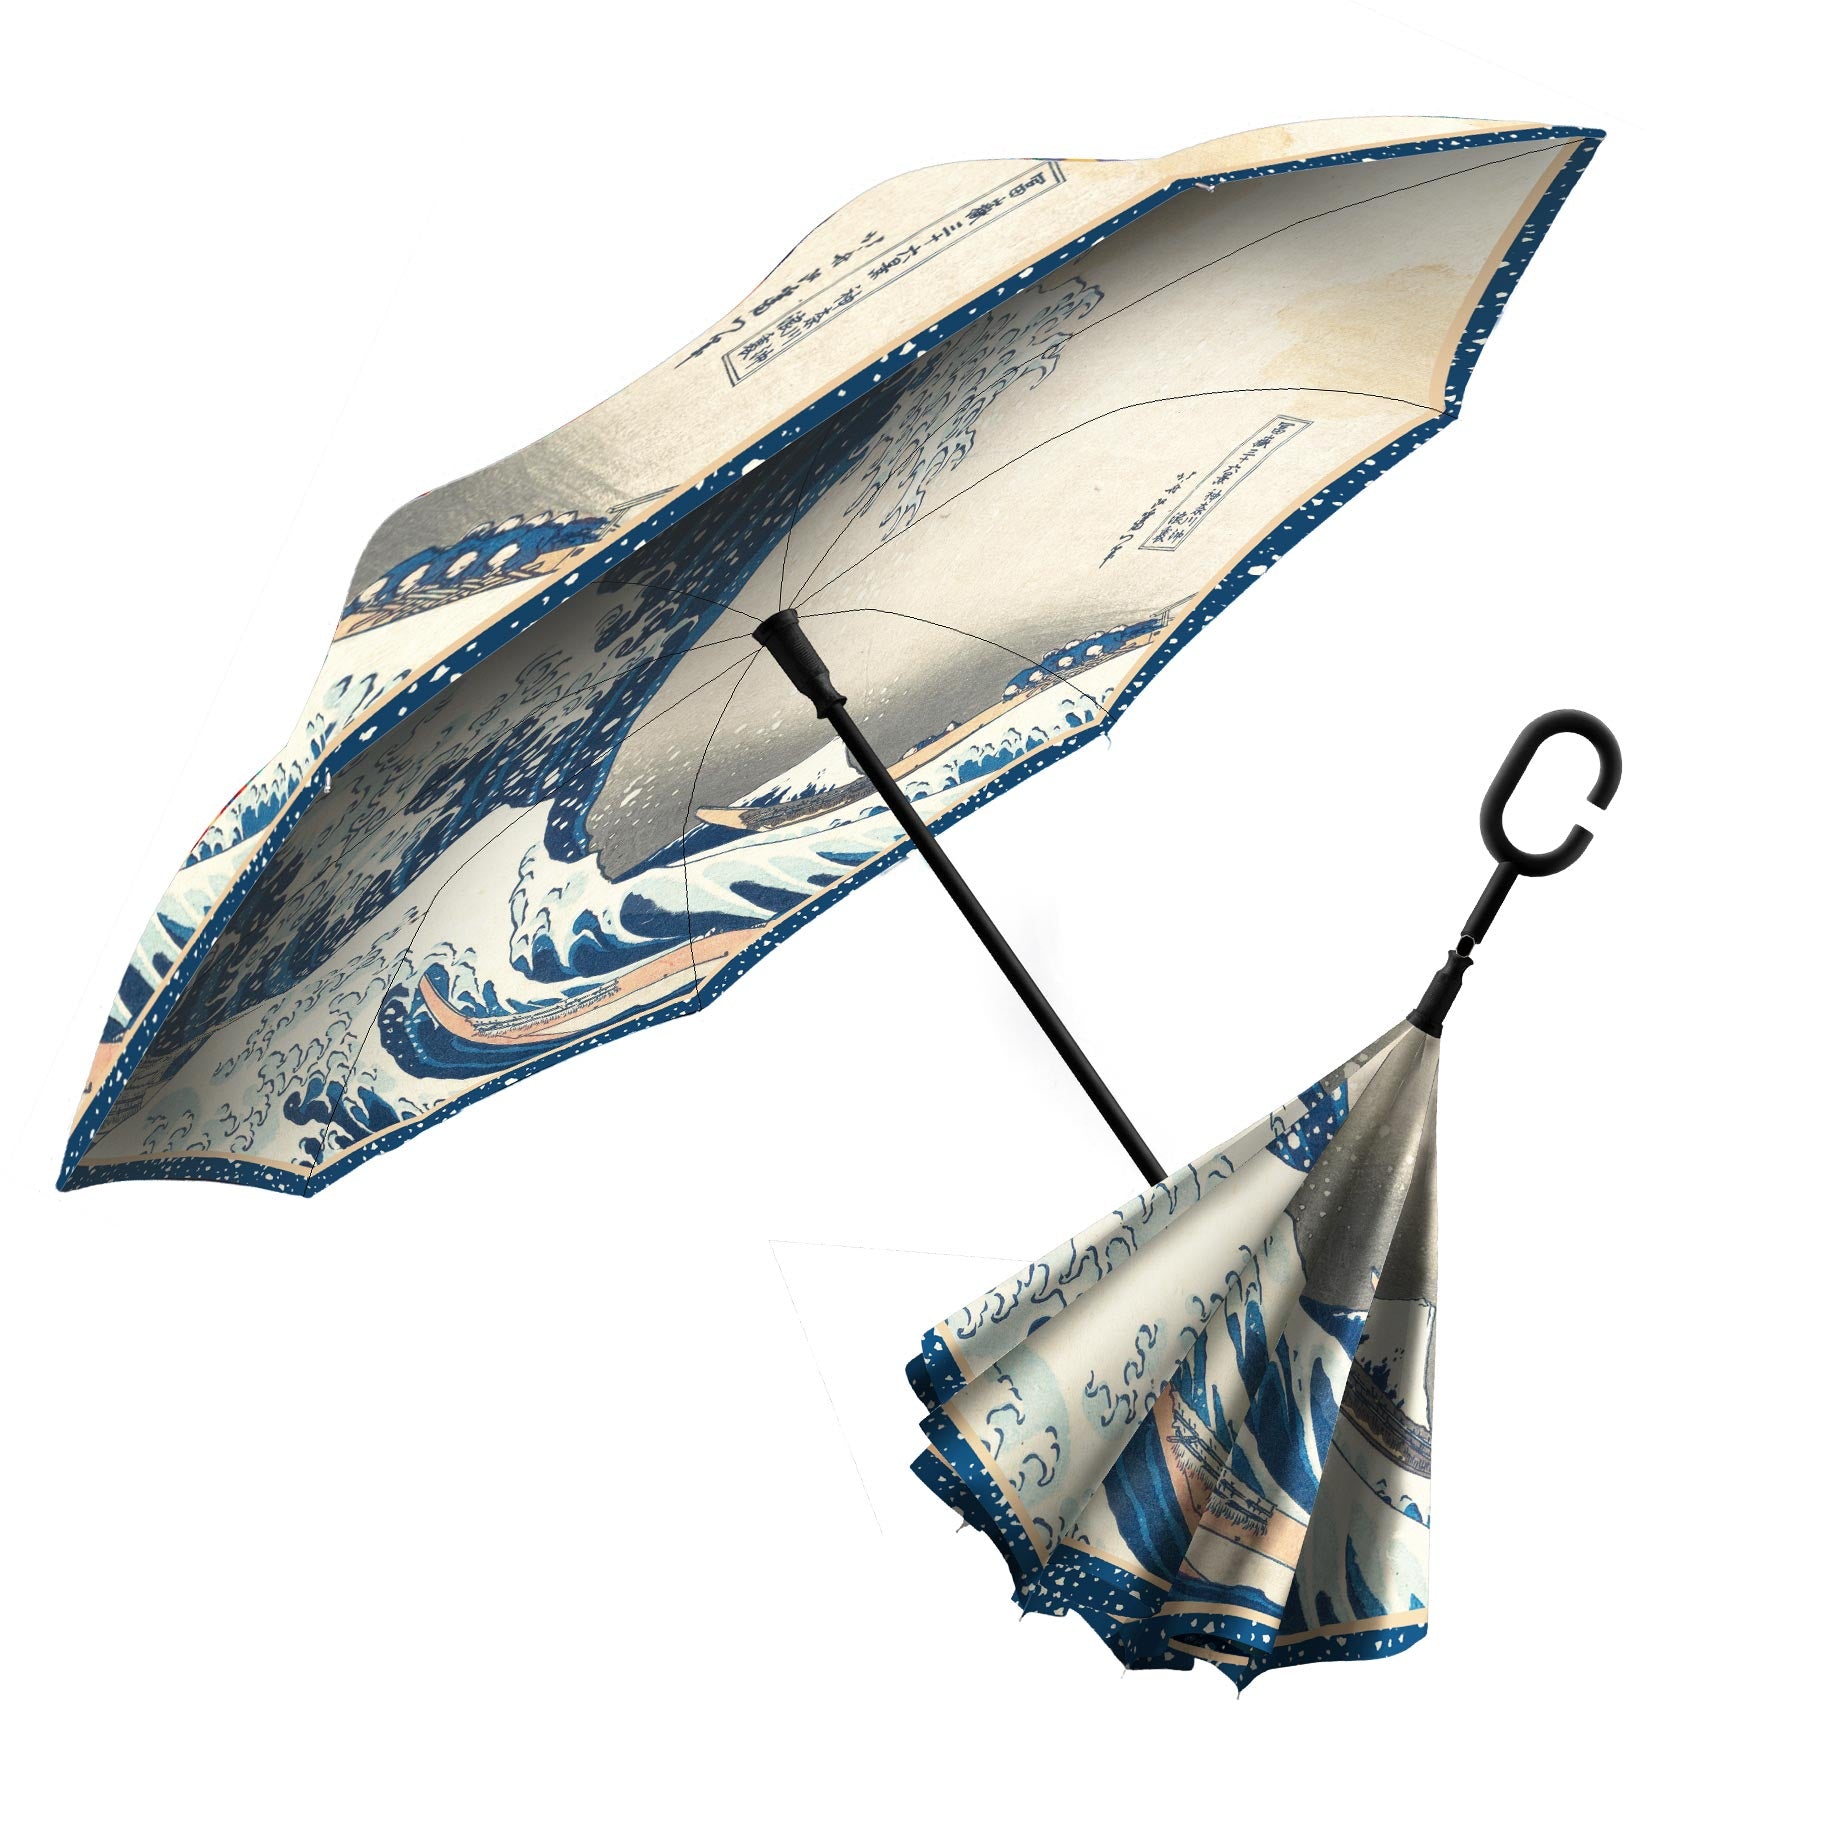 The Great Wave Auto Umbrella